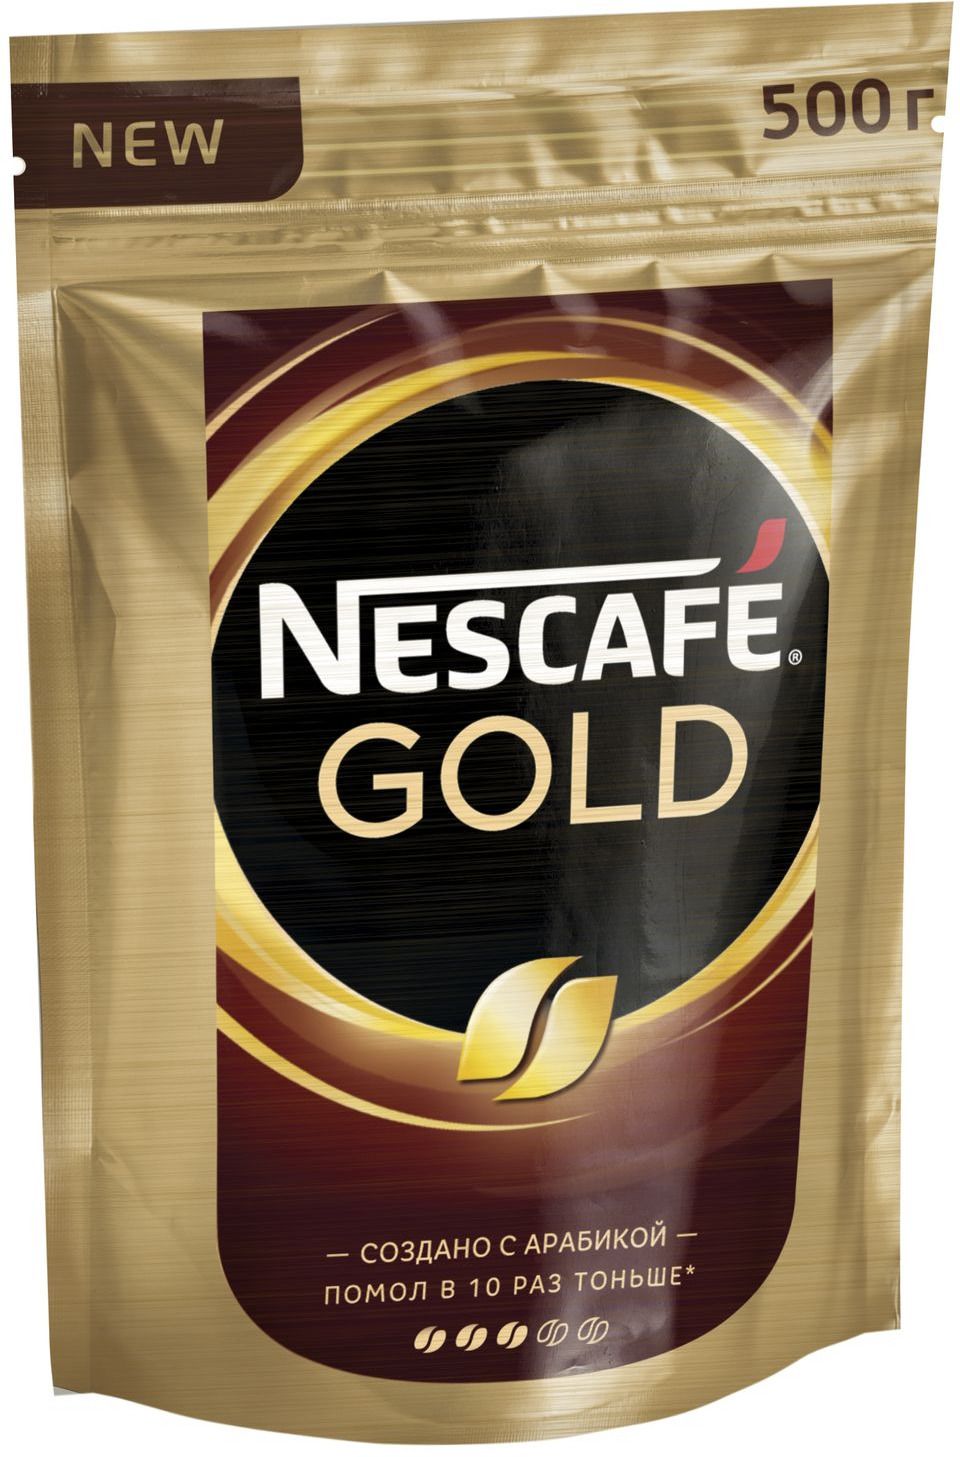   Nescafe Gold, 500 